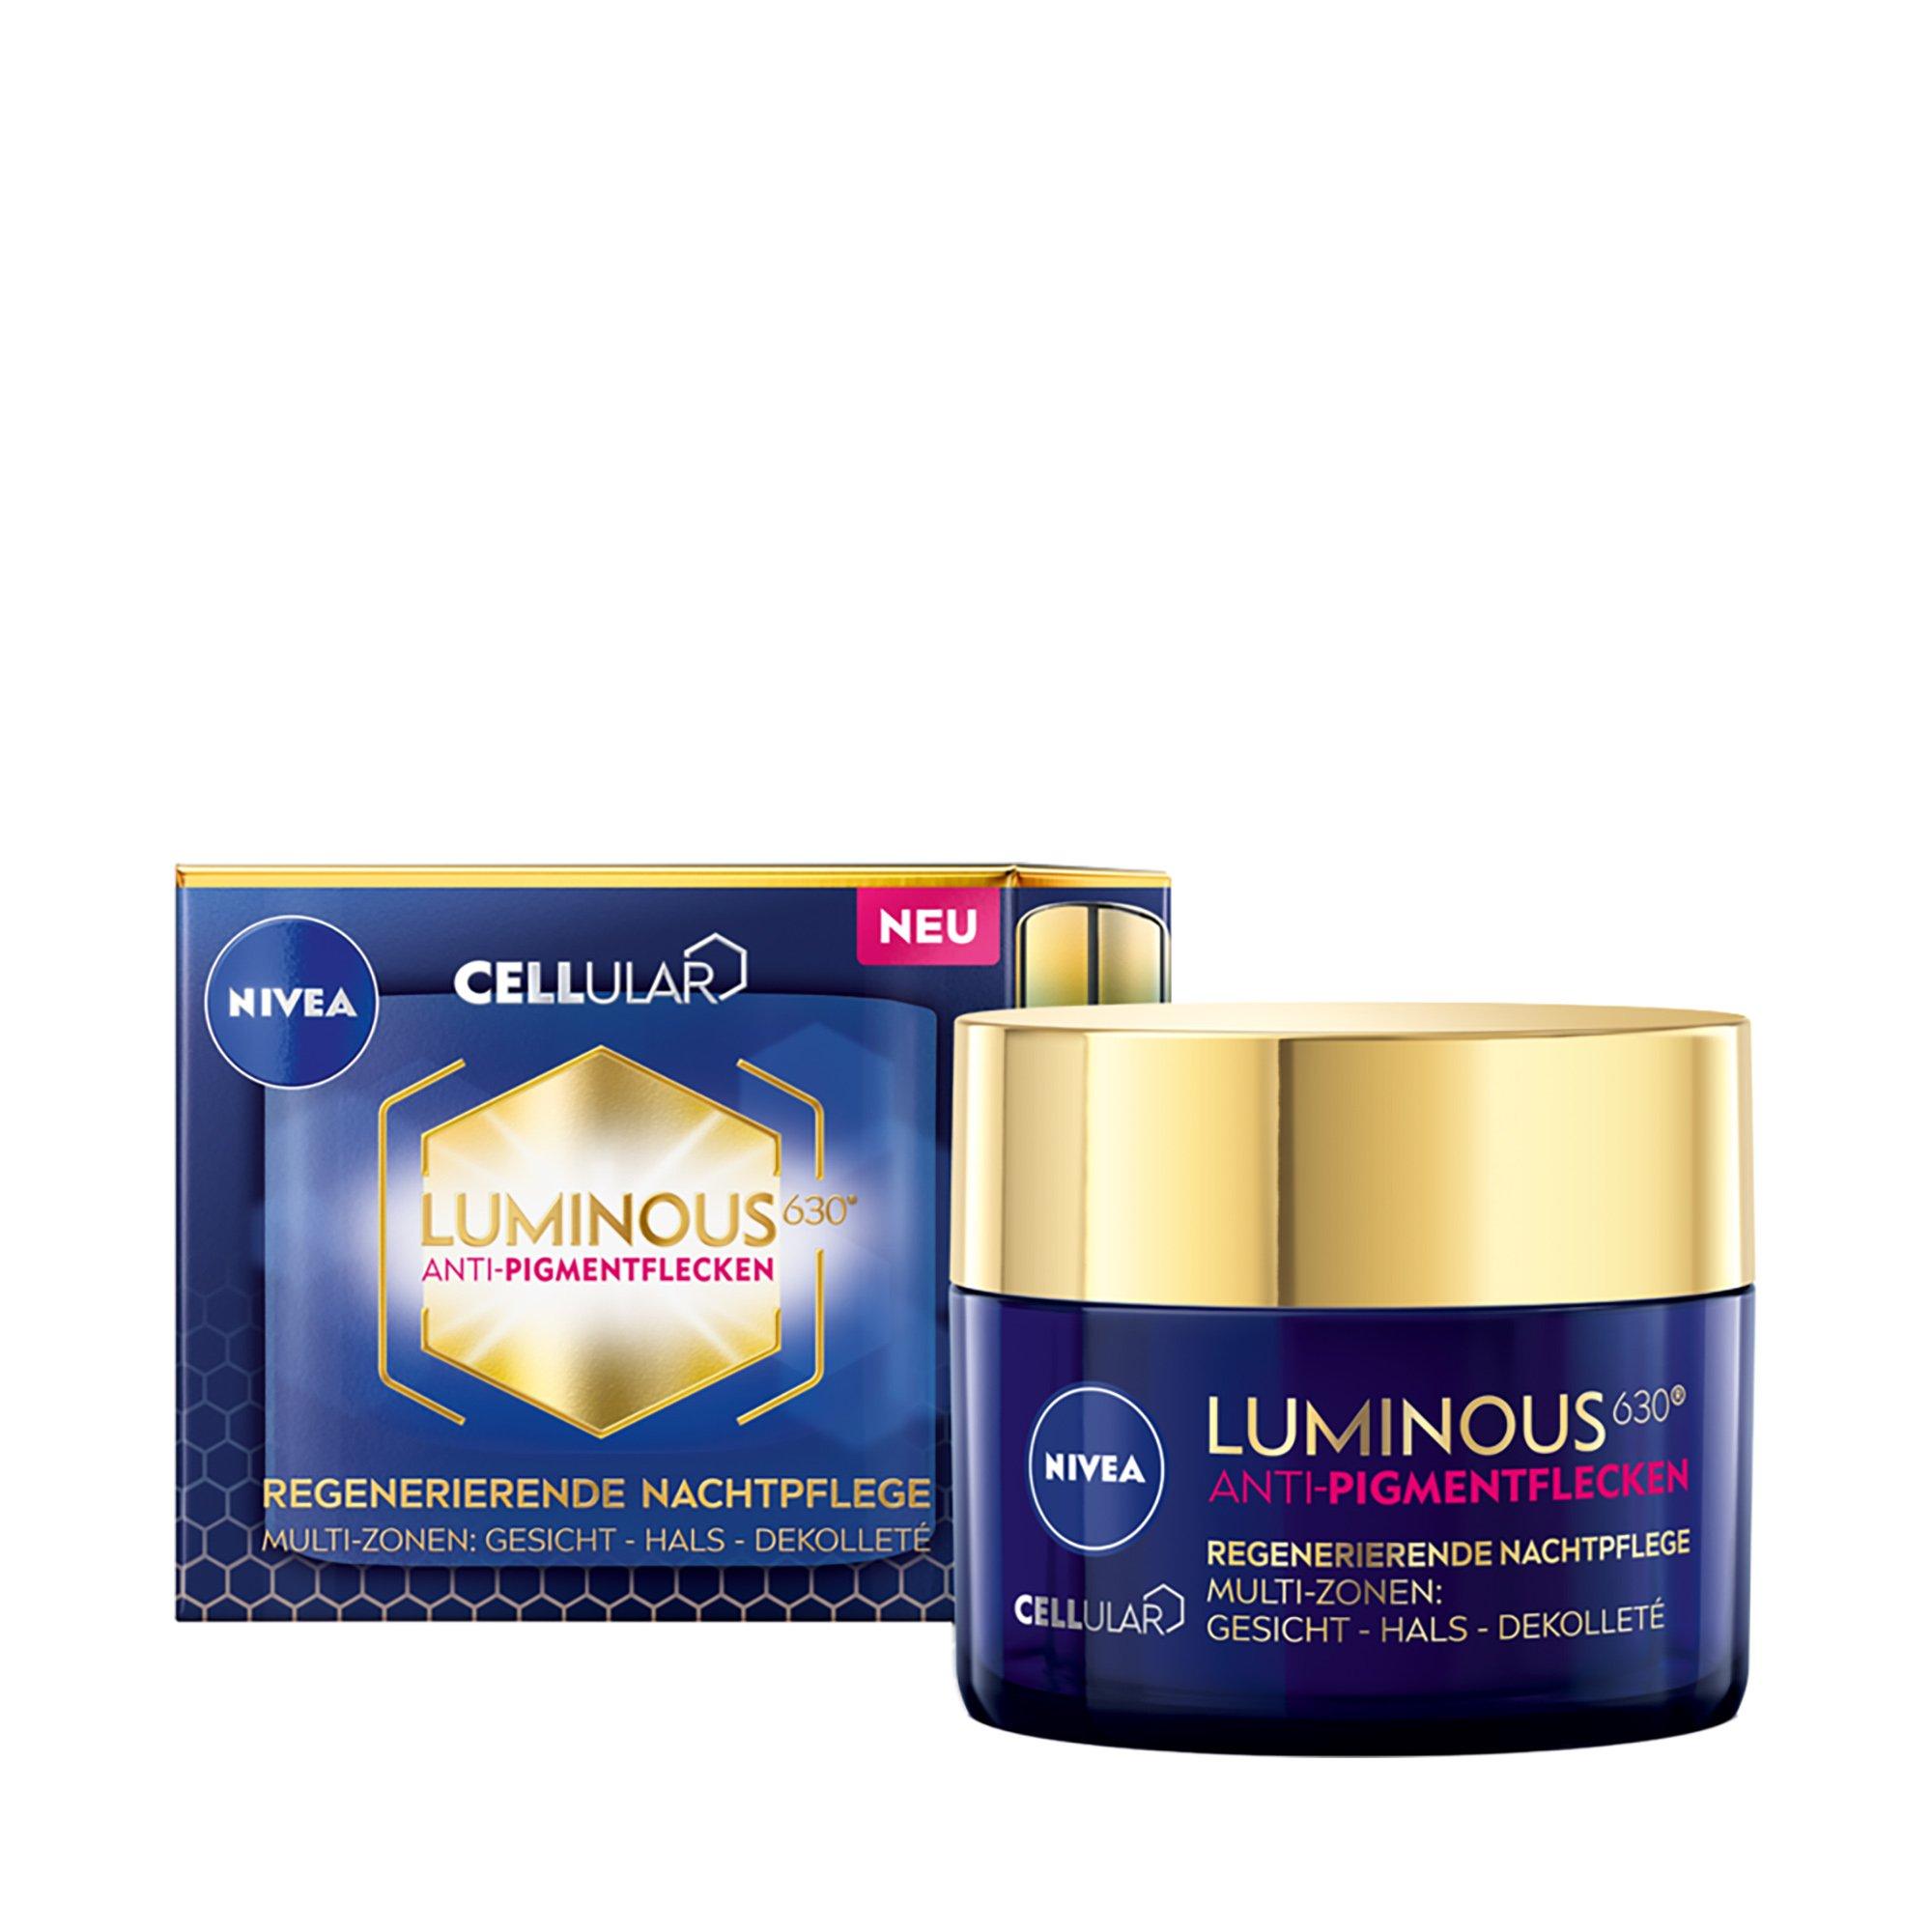 NIVEA Cellular Luminous630® Anti-Pigmentflecken Cellular Luminous630® Anti-Pigmentflecken Nachtcreme 